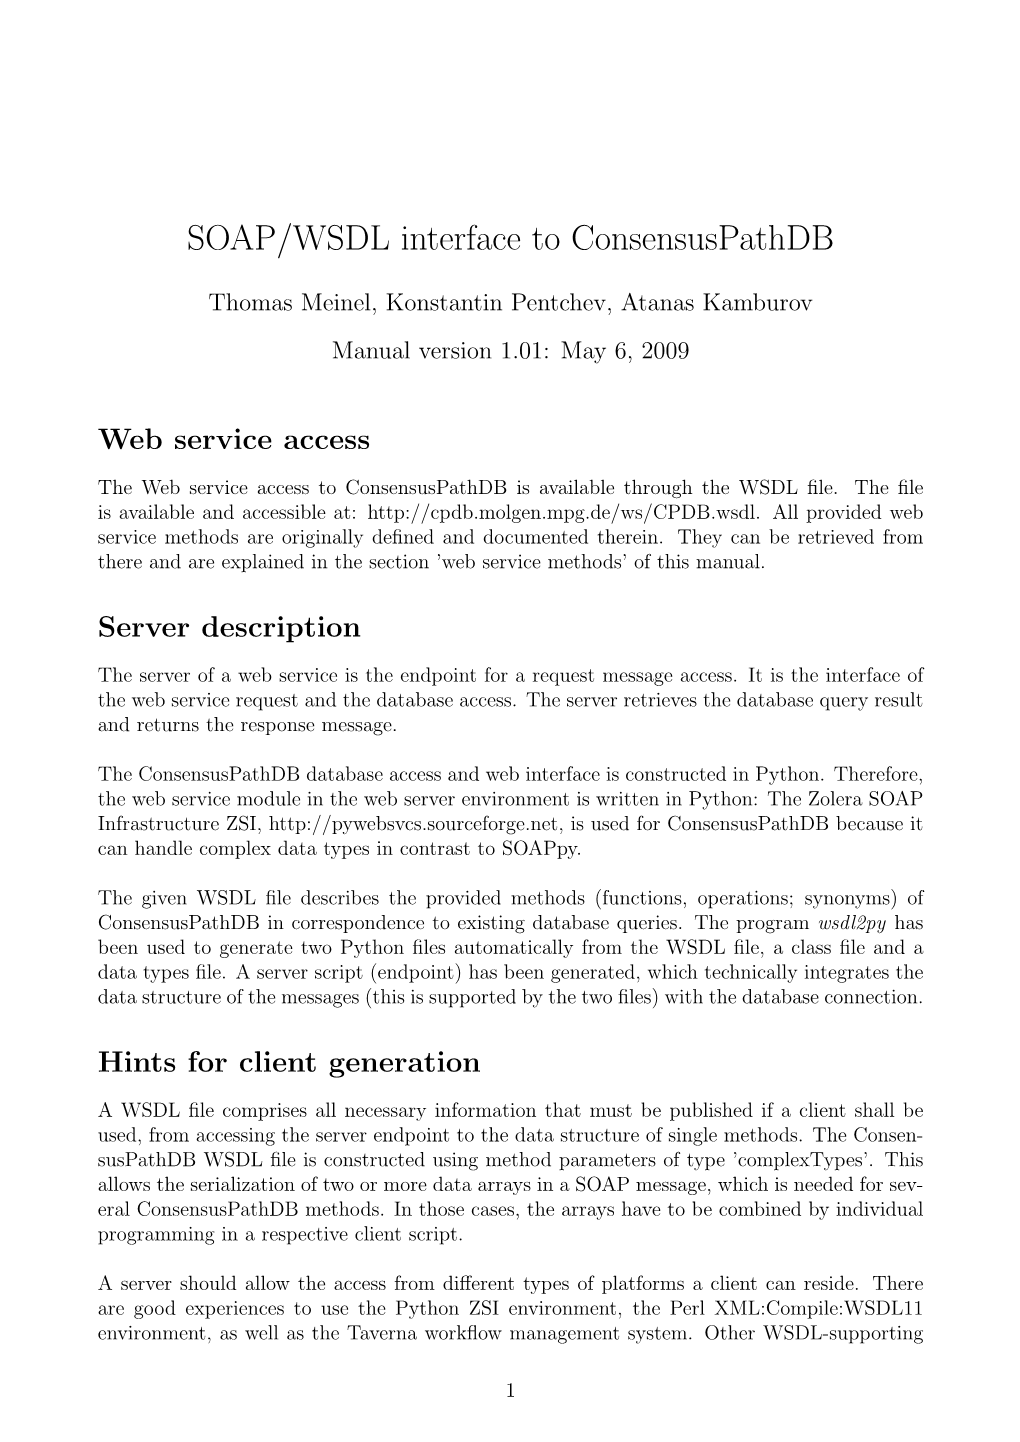 SOAP/WSDL Interface to Consensuspathdb